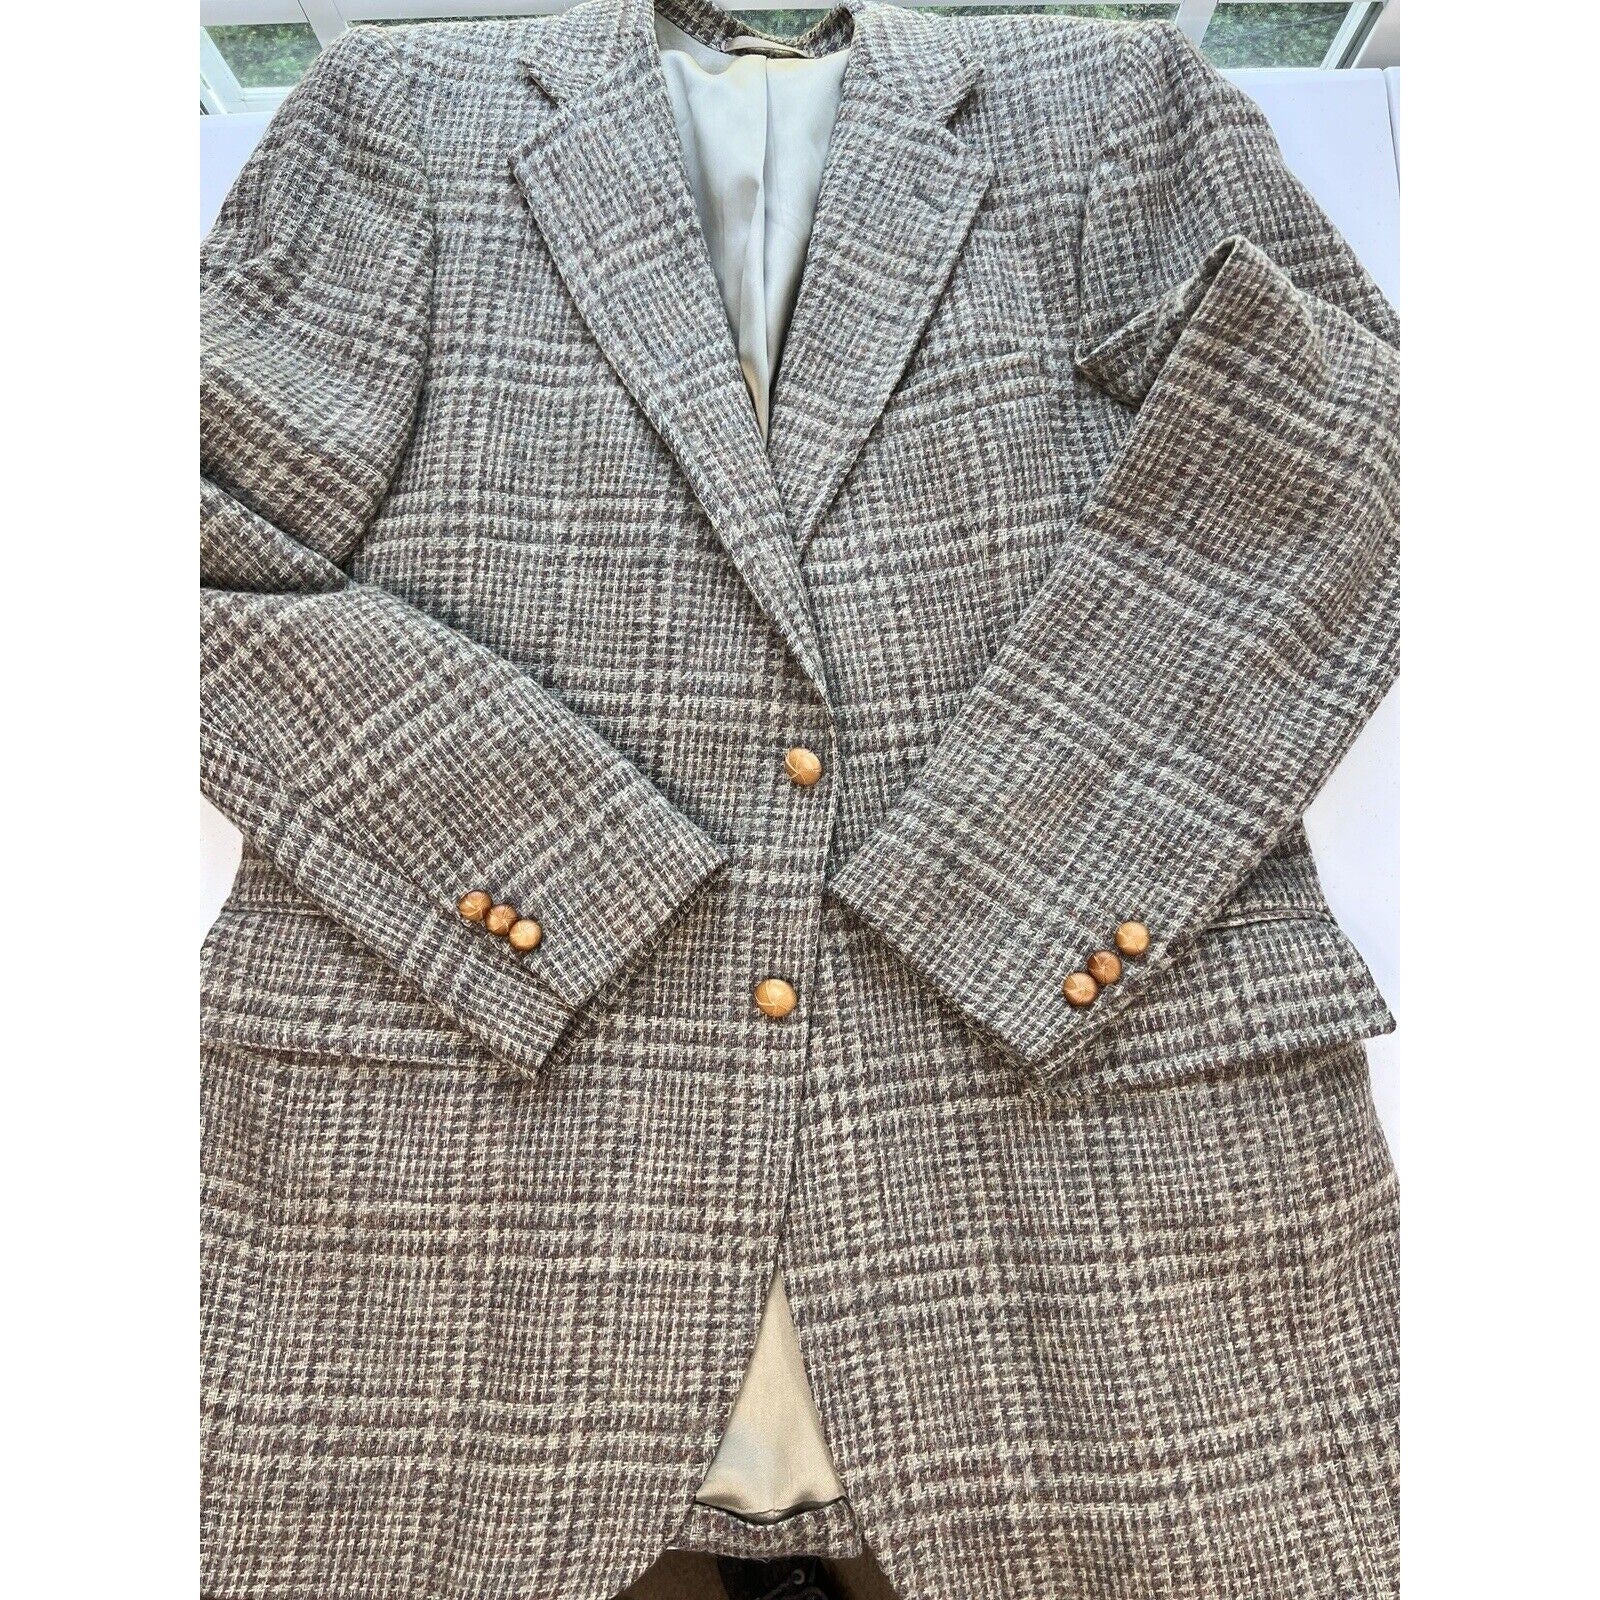 Stanley Blacker 2 Button Wool Blazer Sports Coat Men’s 42R Wood Buttons Plaid